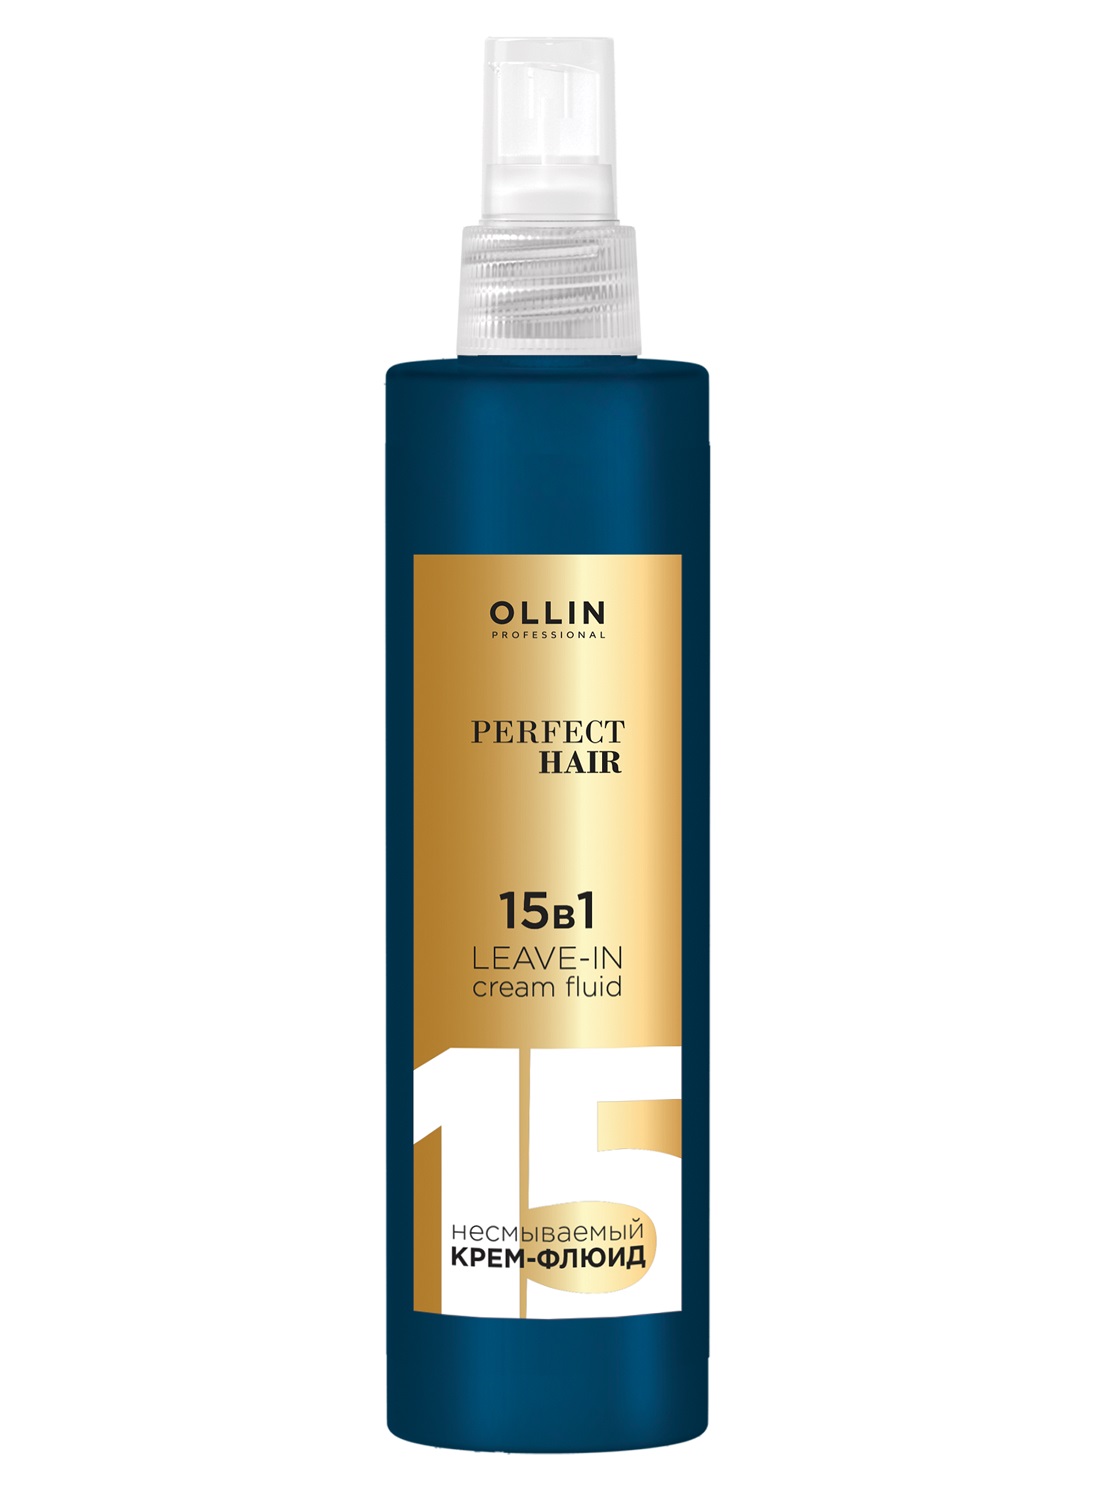 Ollin Professional Несмываемый крем-флюид, 250 мл (Ollin Professional, Perfect Hair) ollin крем флюид для волос ollin perfect hair 15в1 несмываемый 250 мл